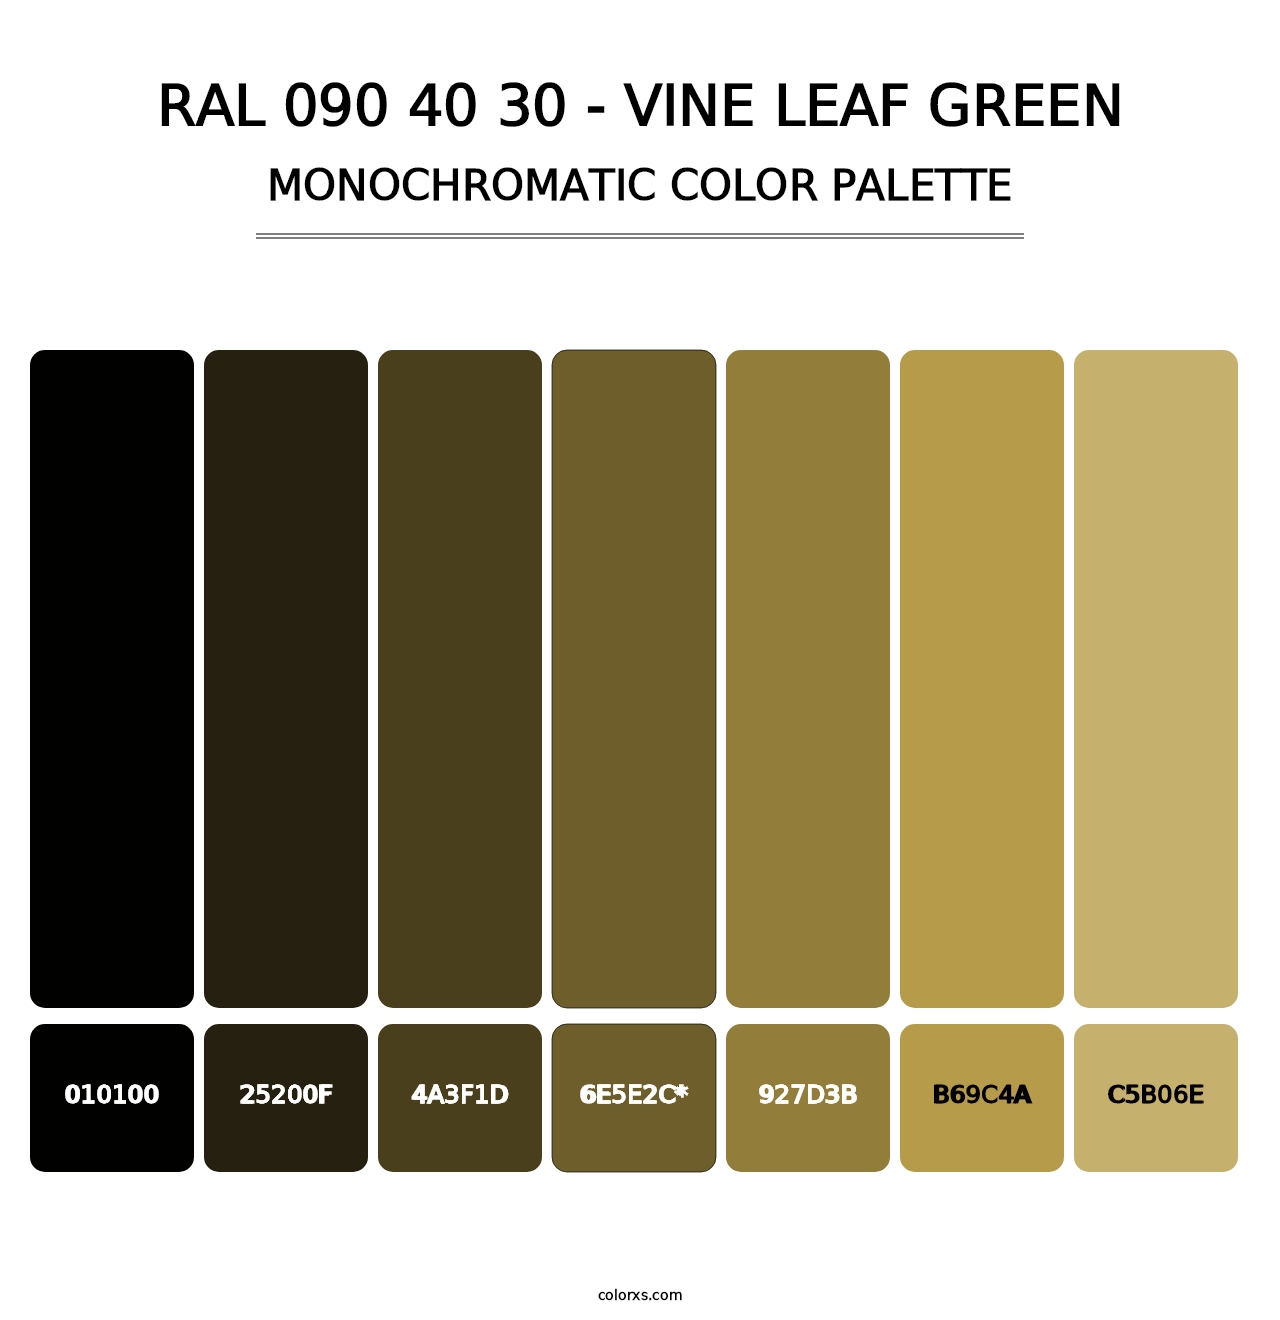 RAL 090 40 30 - Vine Leaf Green - Monochromatic Color Palette